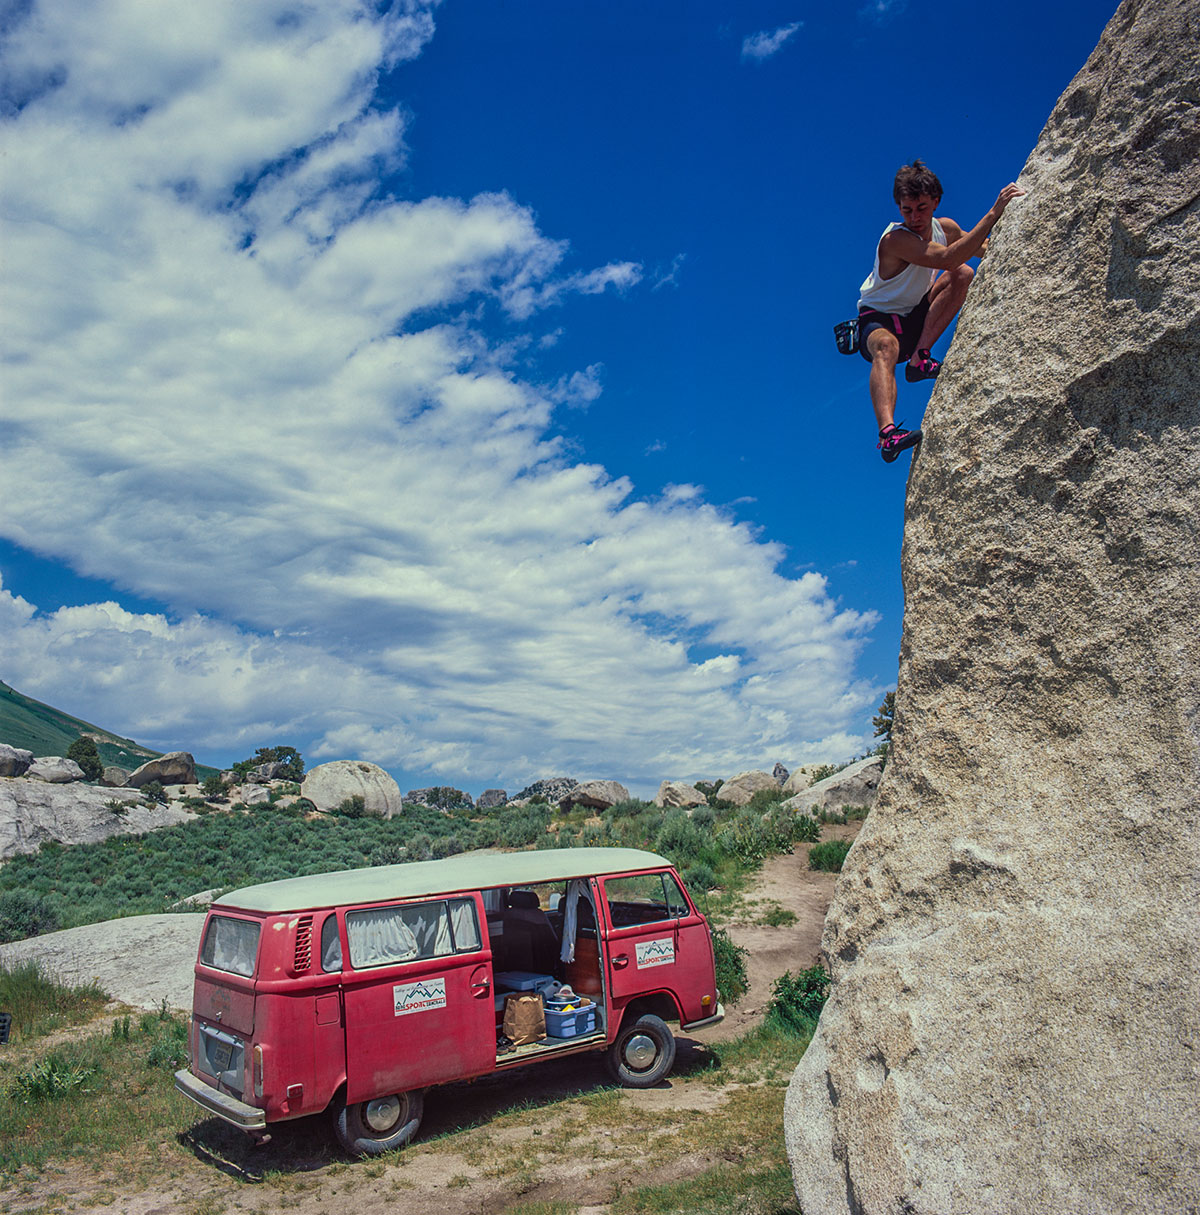 City of Rocks - VW van with climber